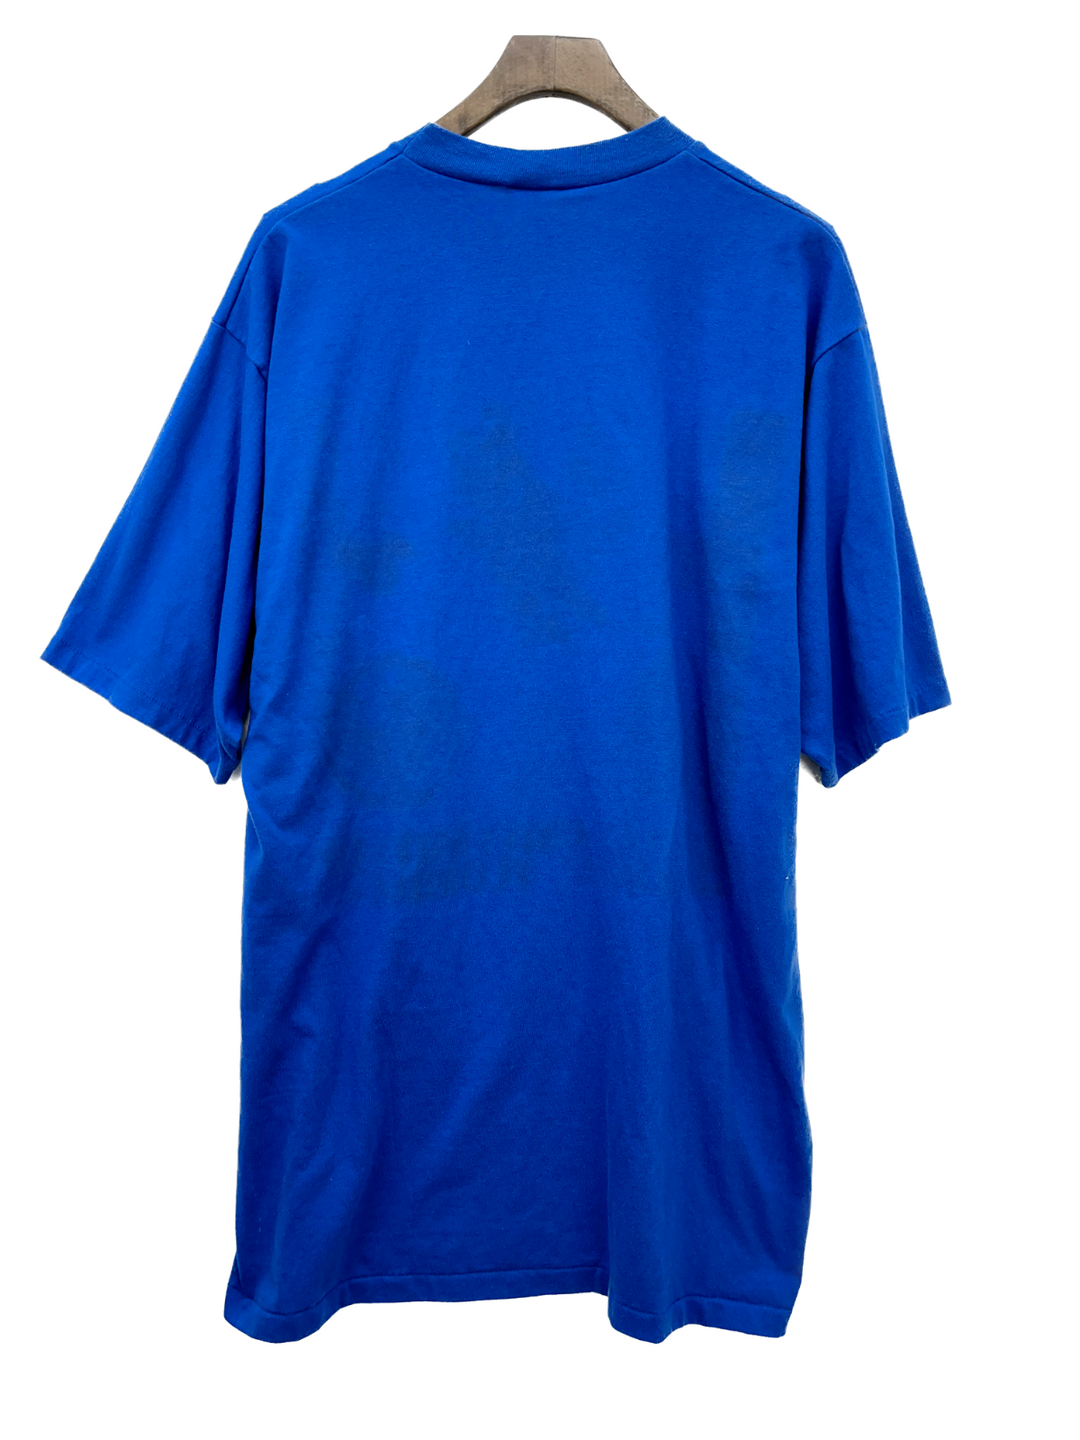 University of Florida Gators NCAA Vintage T-shirt Size XL Blue Single Stitch 90s